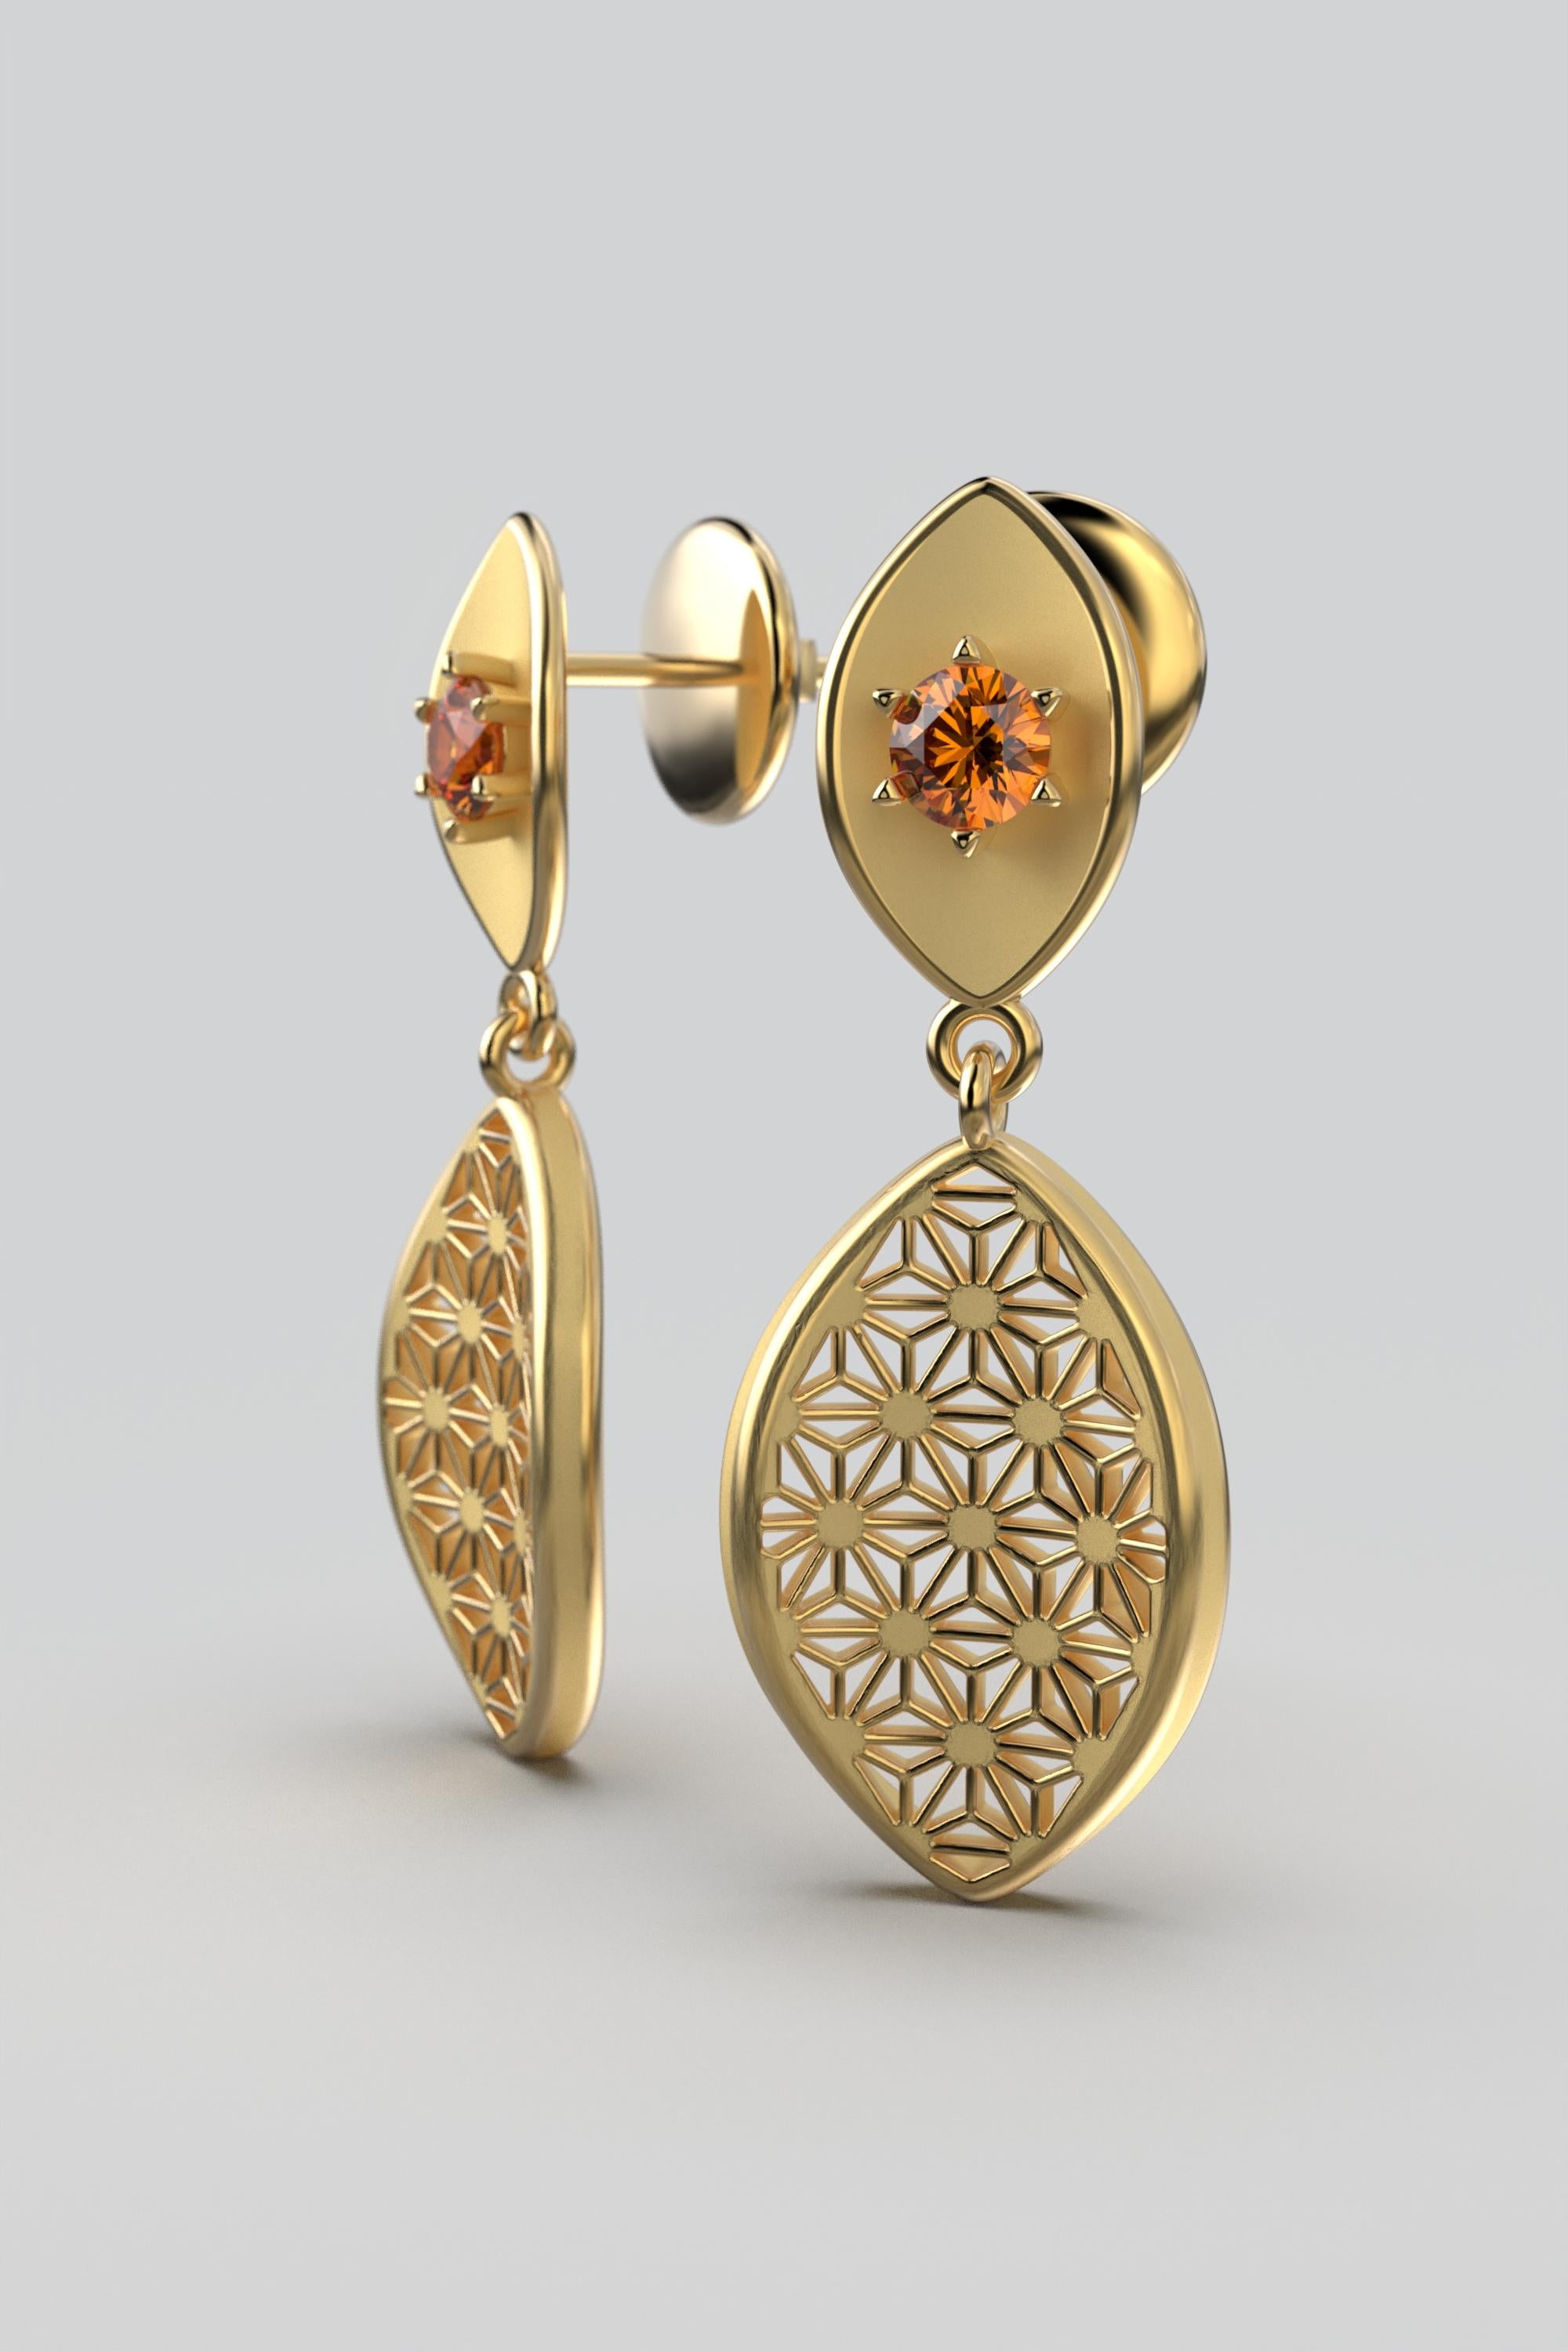 Modern  Oltremare Gioielli 14k Gold Hessonite Garnet Earrings made in Italy For Sale